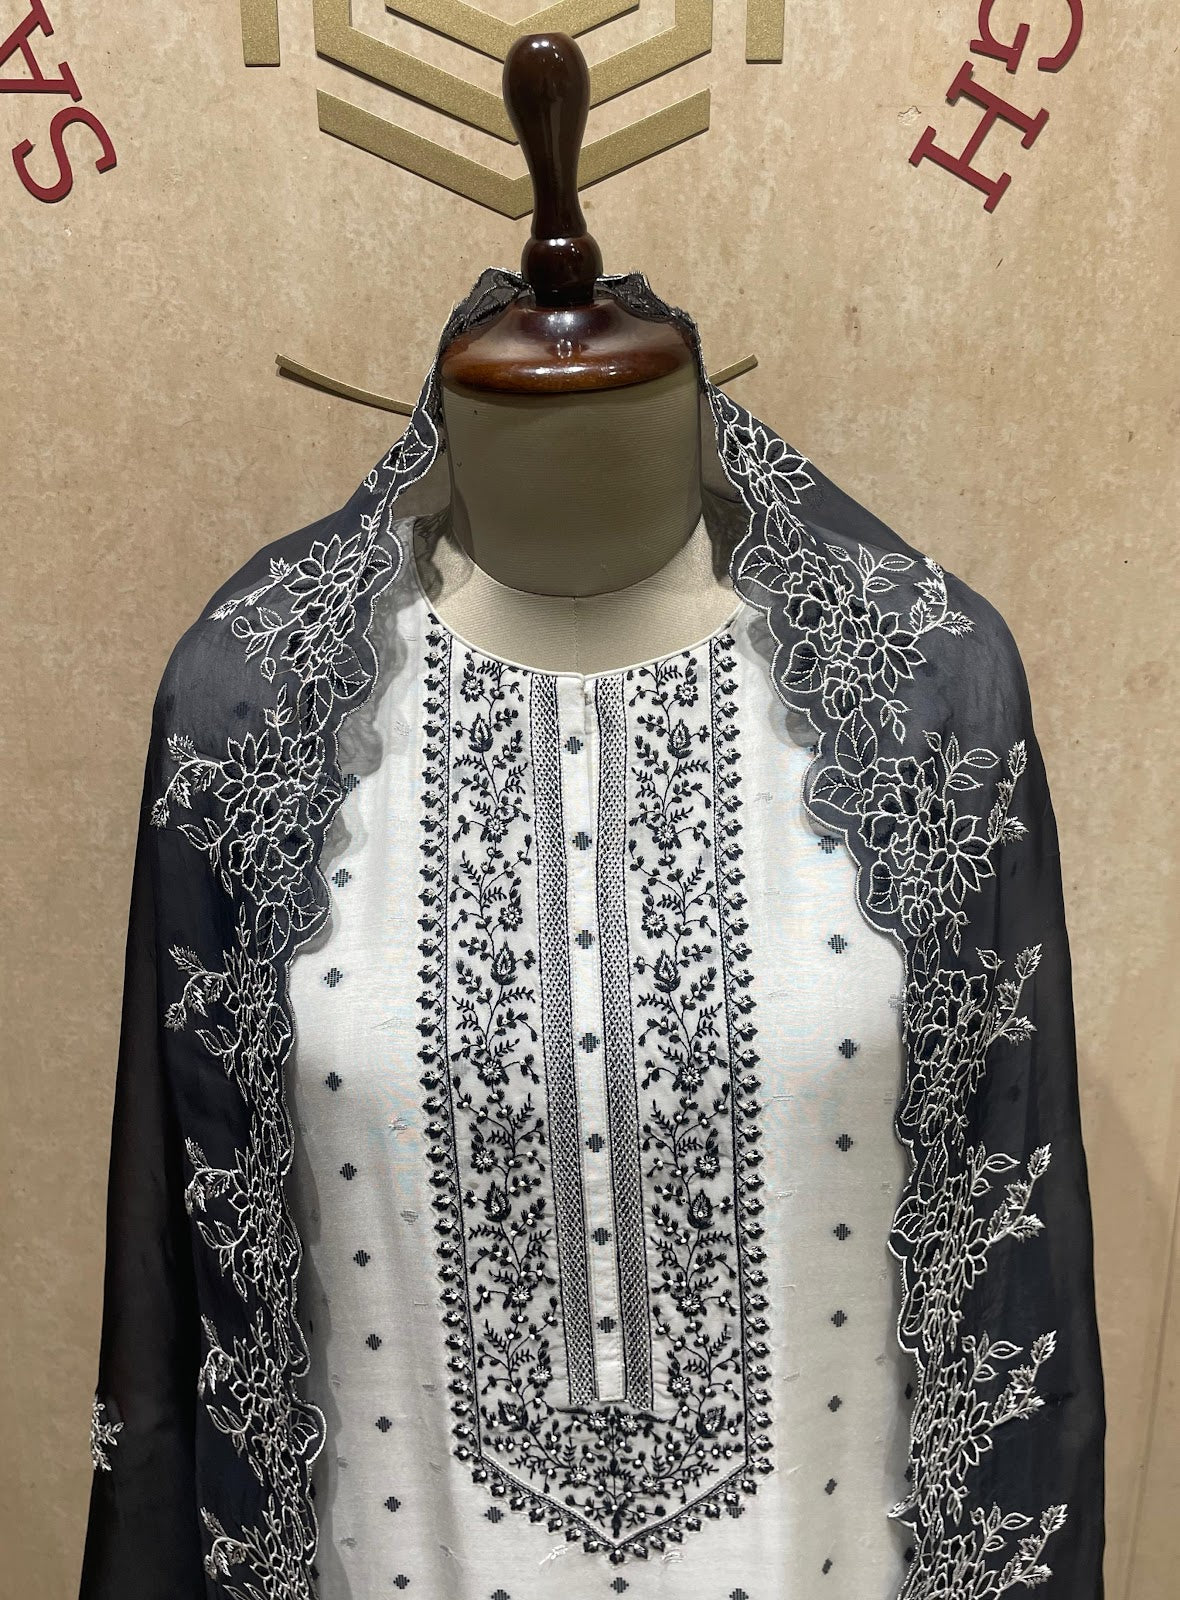 Yusra Naariti Muslin Pant Style Suits Wholesale Price